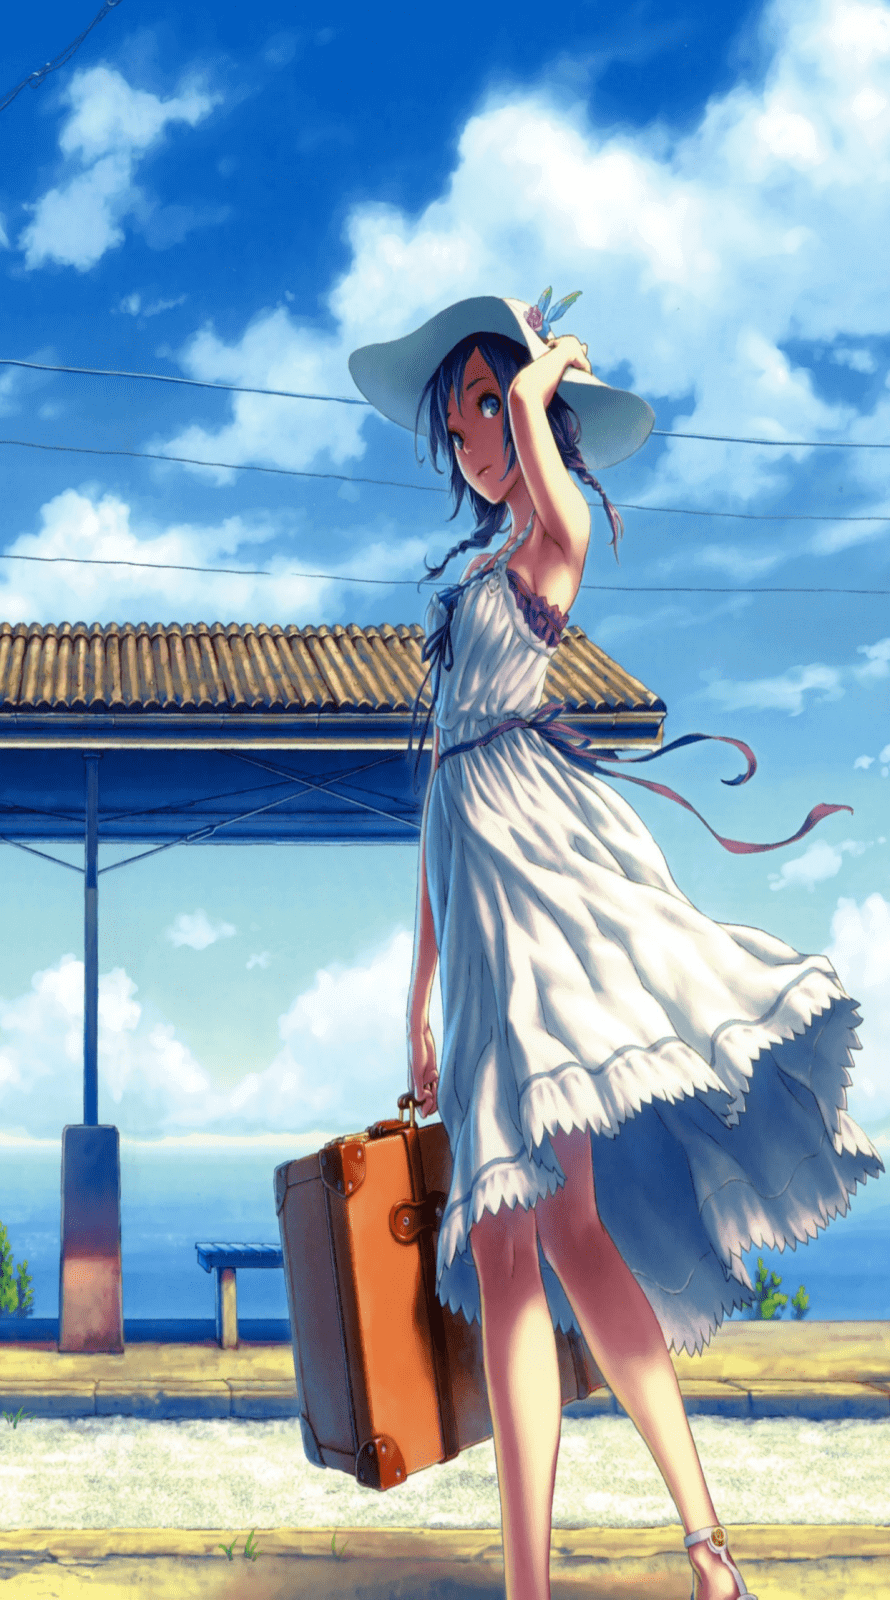 Cute anime women in summer wallpaper iphone Best summer background